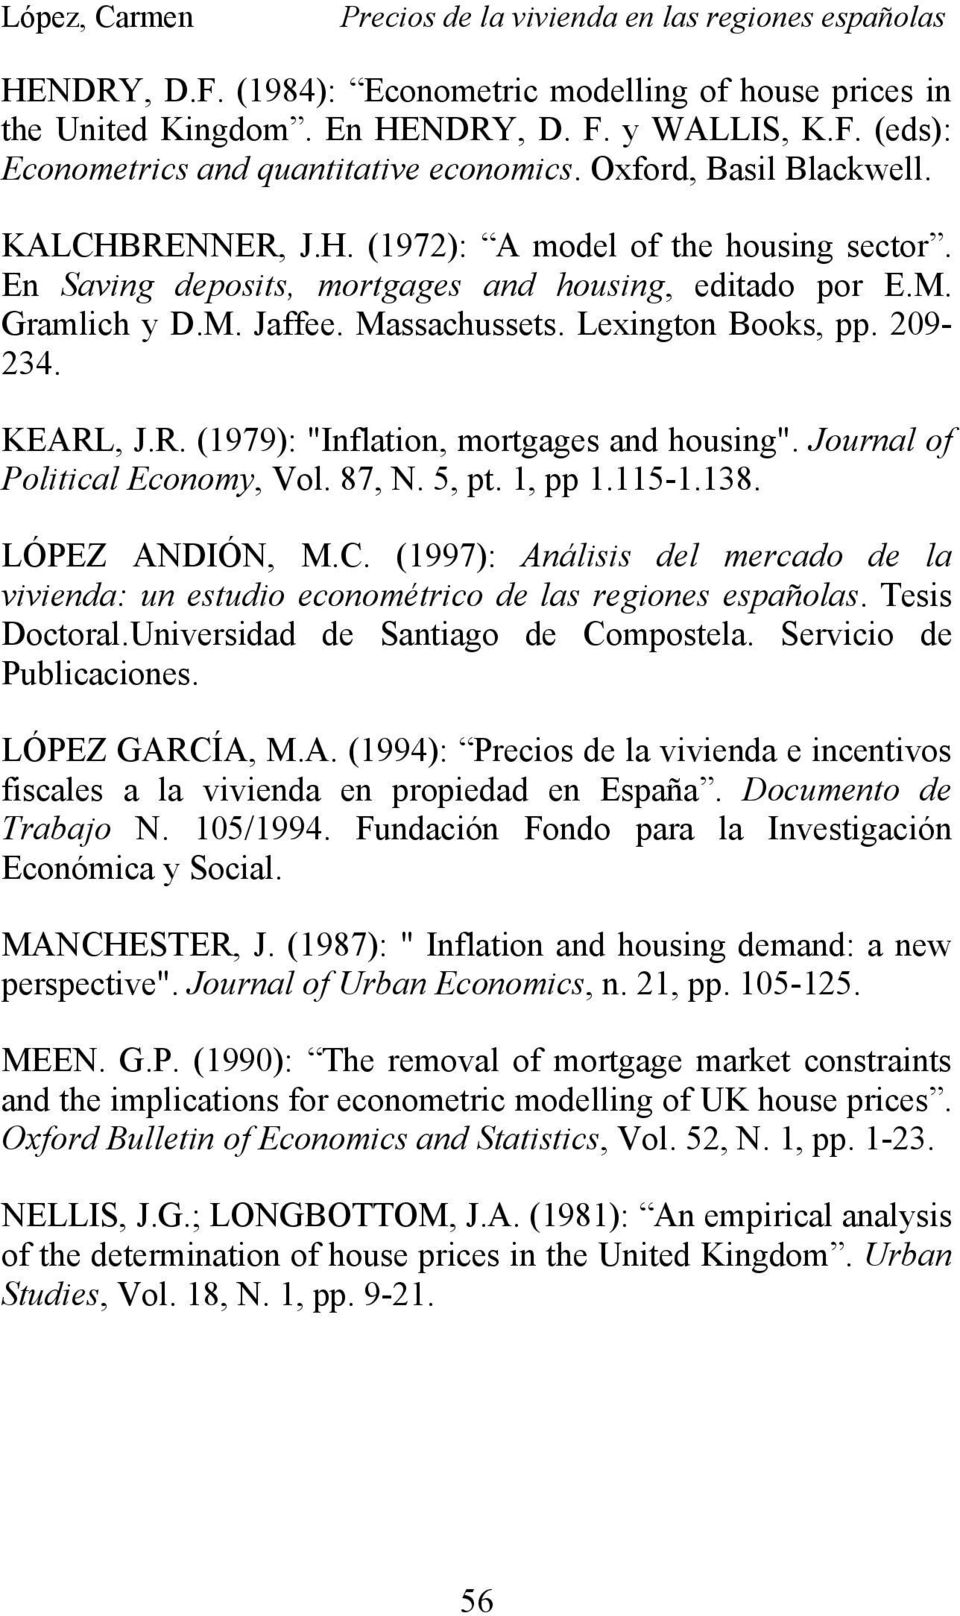 Lexington Books, pp. 209-234. KEARL, J.R. (1979): "Inflation, mortgages and housing". Journal of Political Economy, Vol. 87, N. 5, pt. 1, pp 1.115-1.138. LÓPEZ ANDIÓN, M.C.